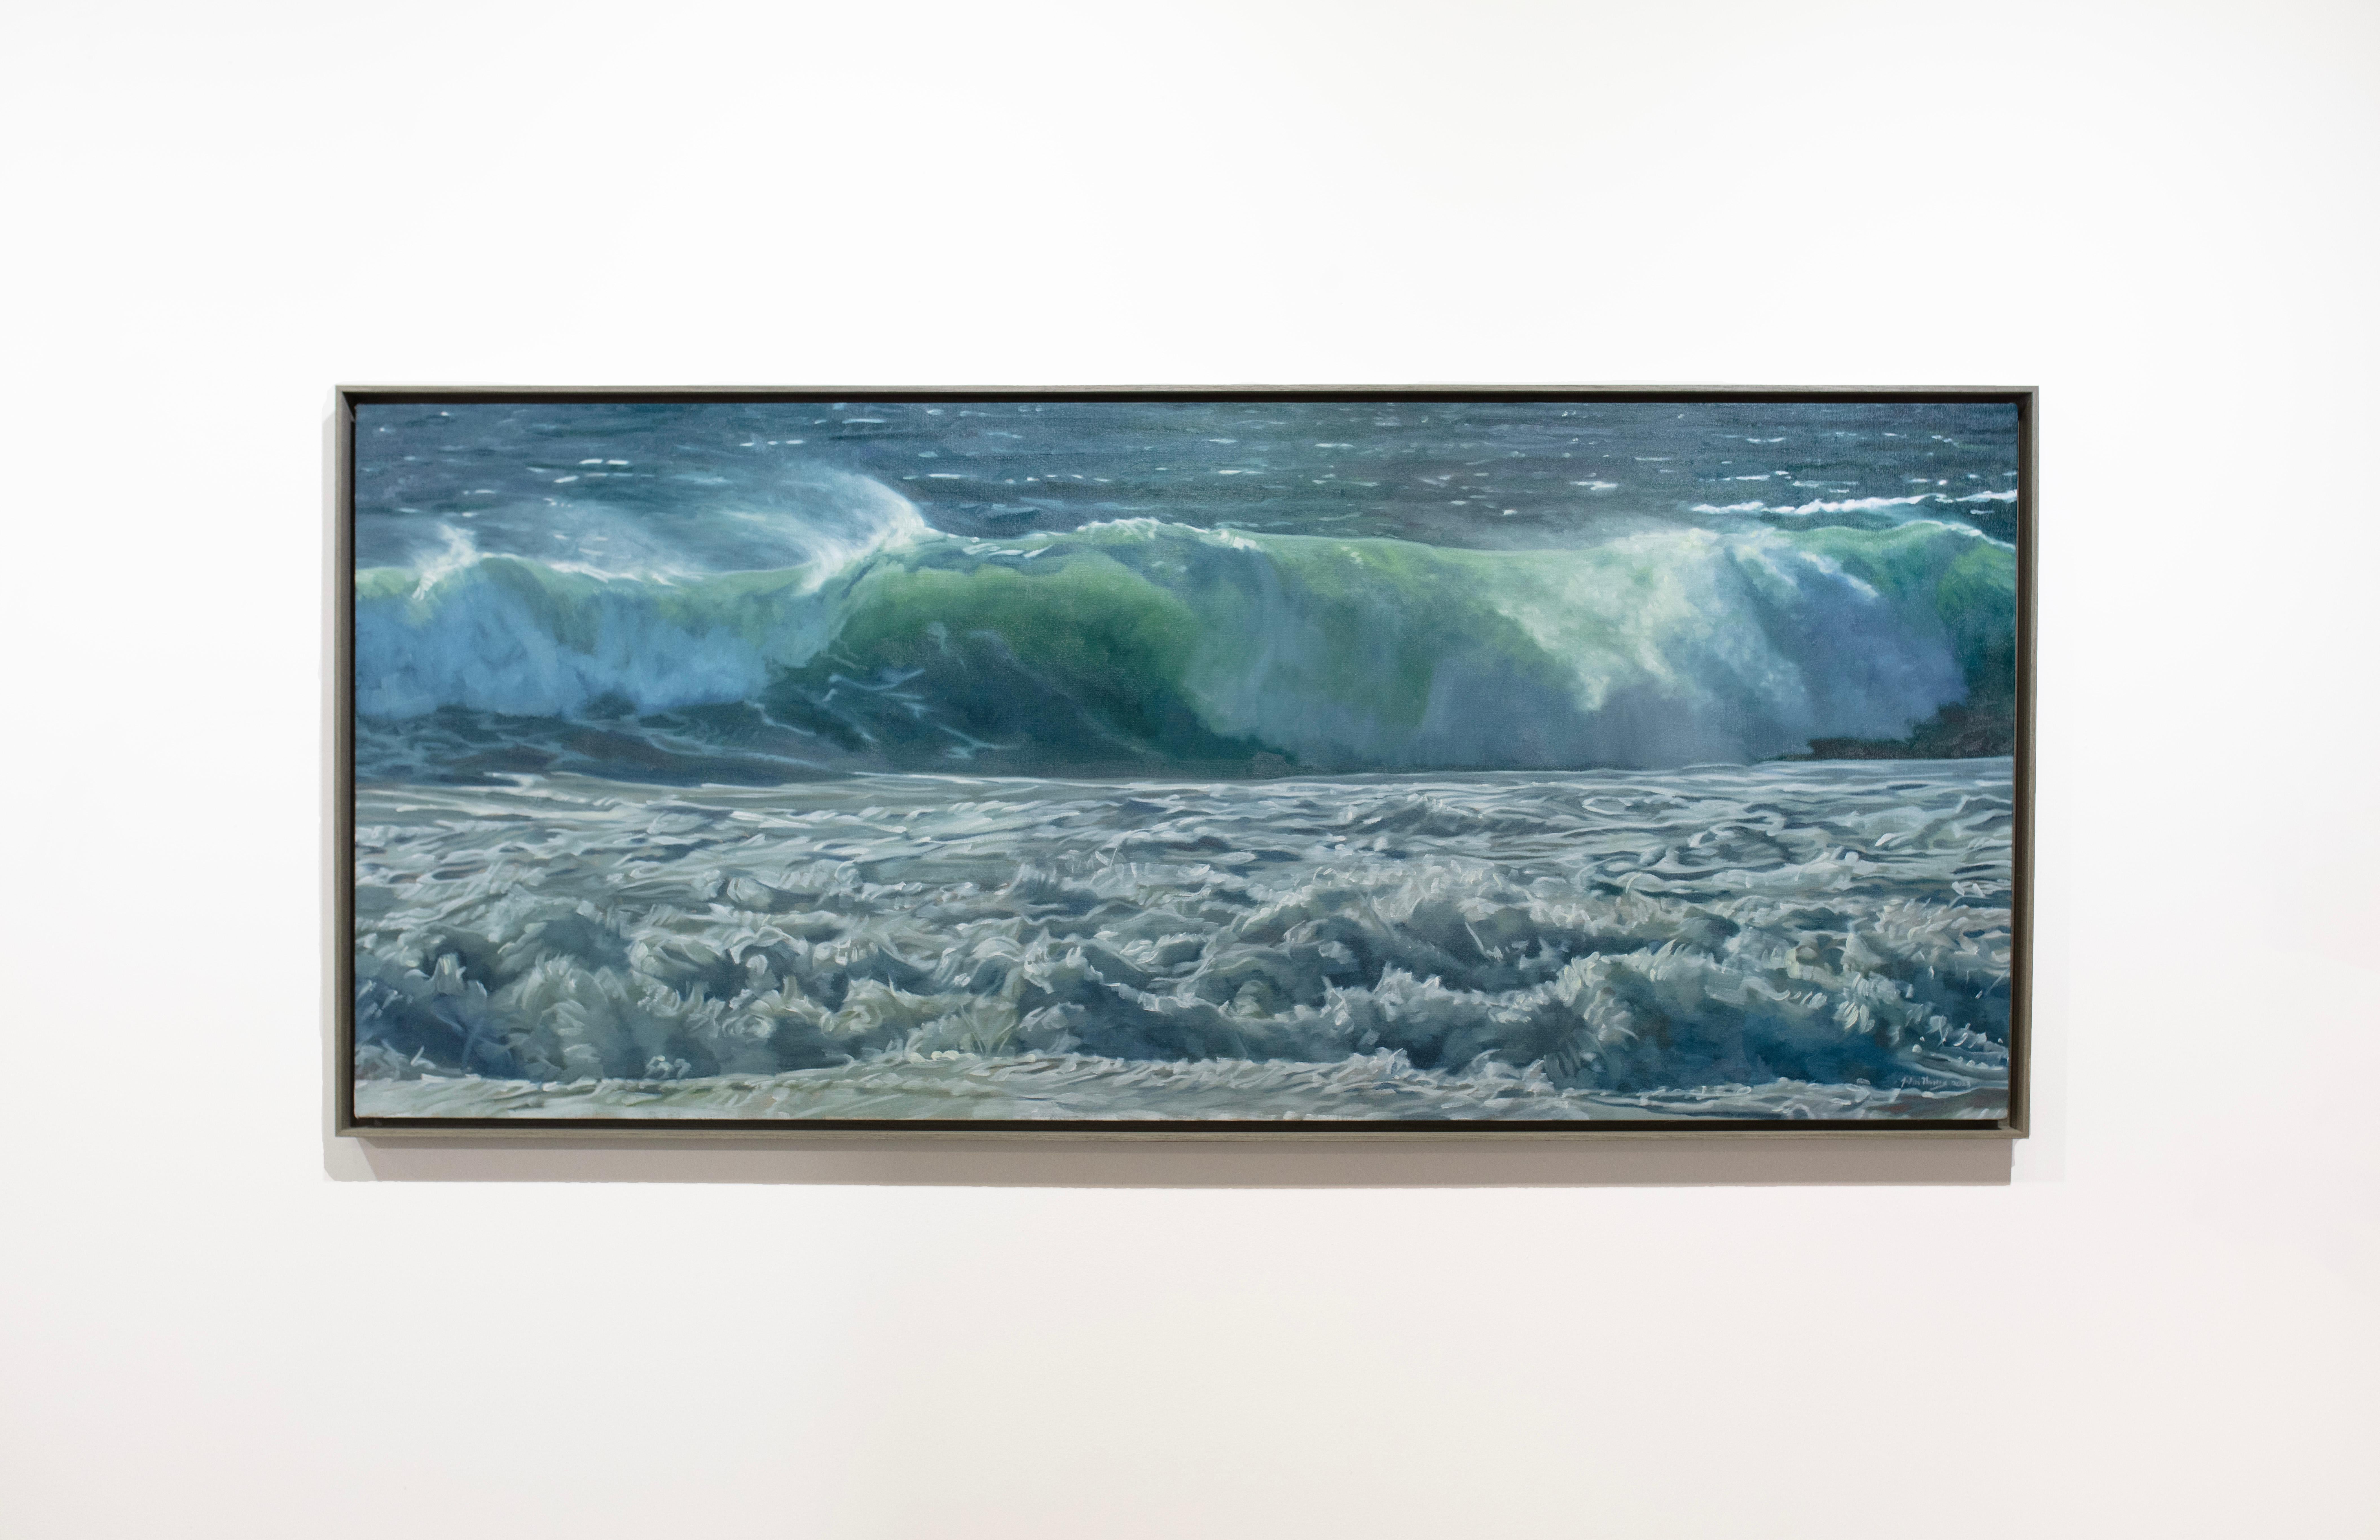 John Harris (painter) Landscape Painting - "Curler 2" Naturalistic Coastal Ocean Waves Oil Painting